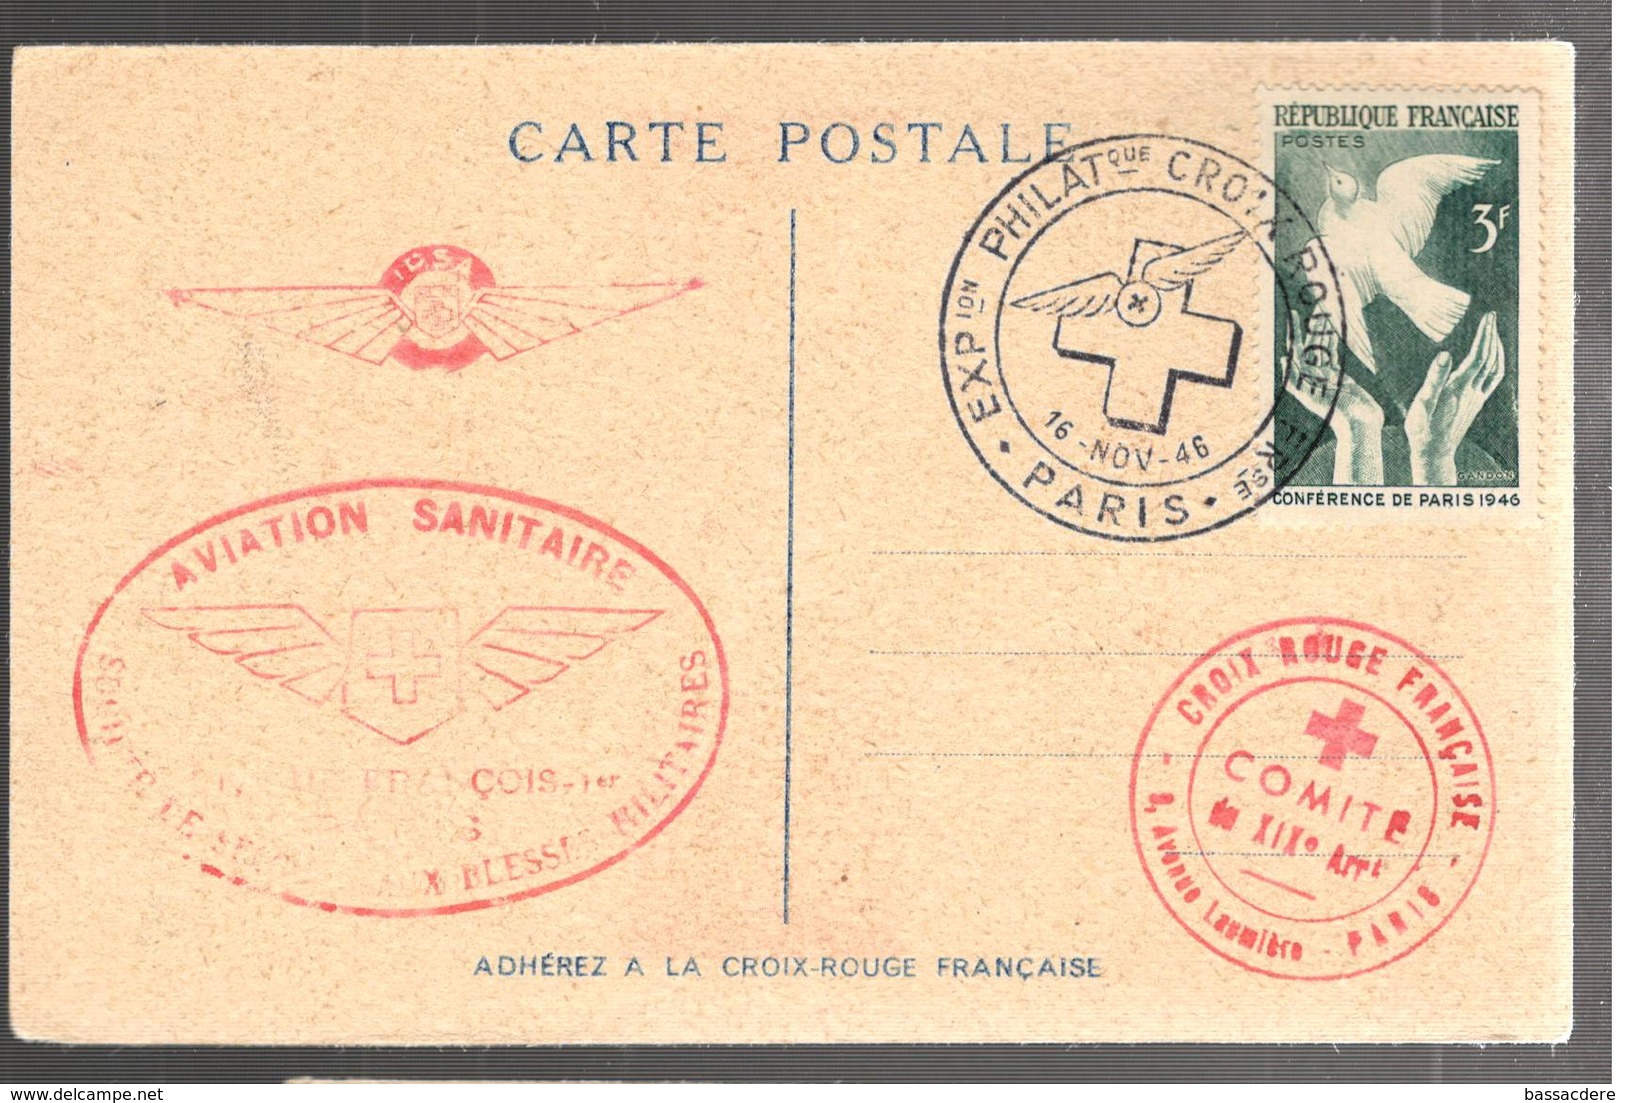 25838 - AVIATION SANITAIRE - Croix-Rouge